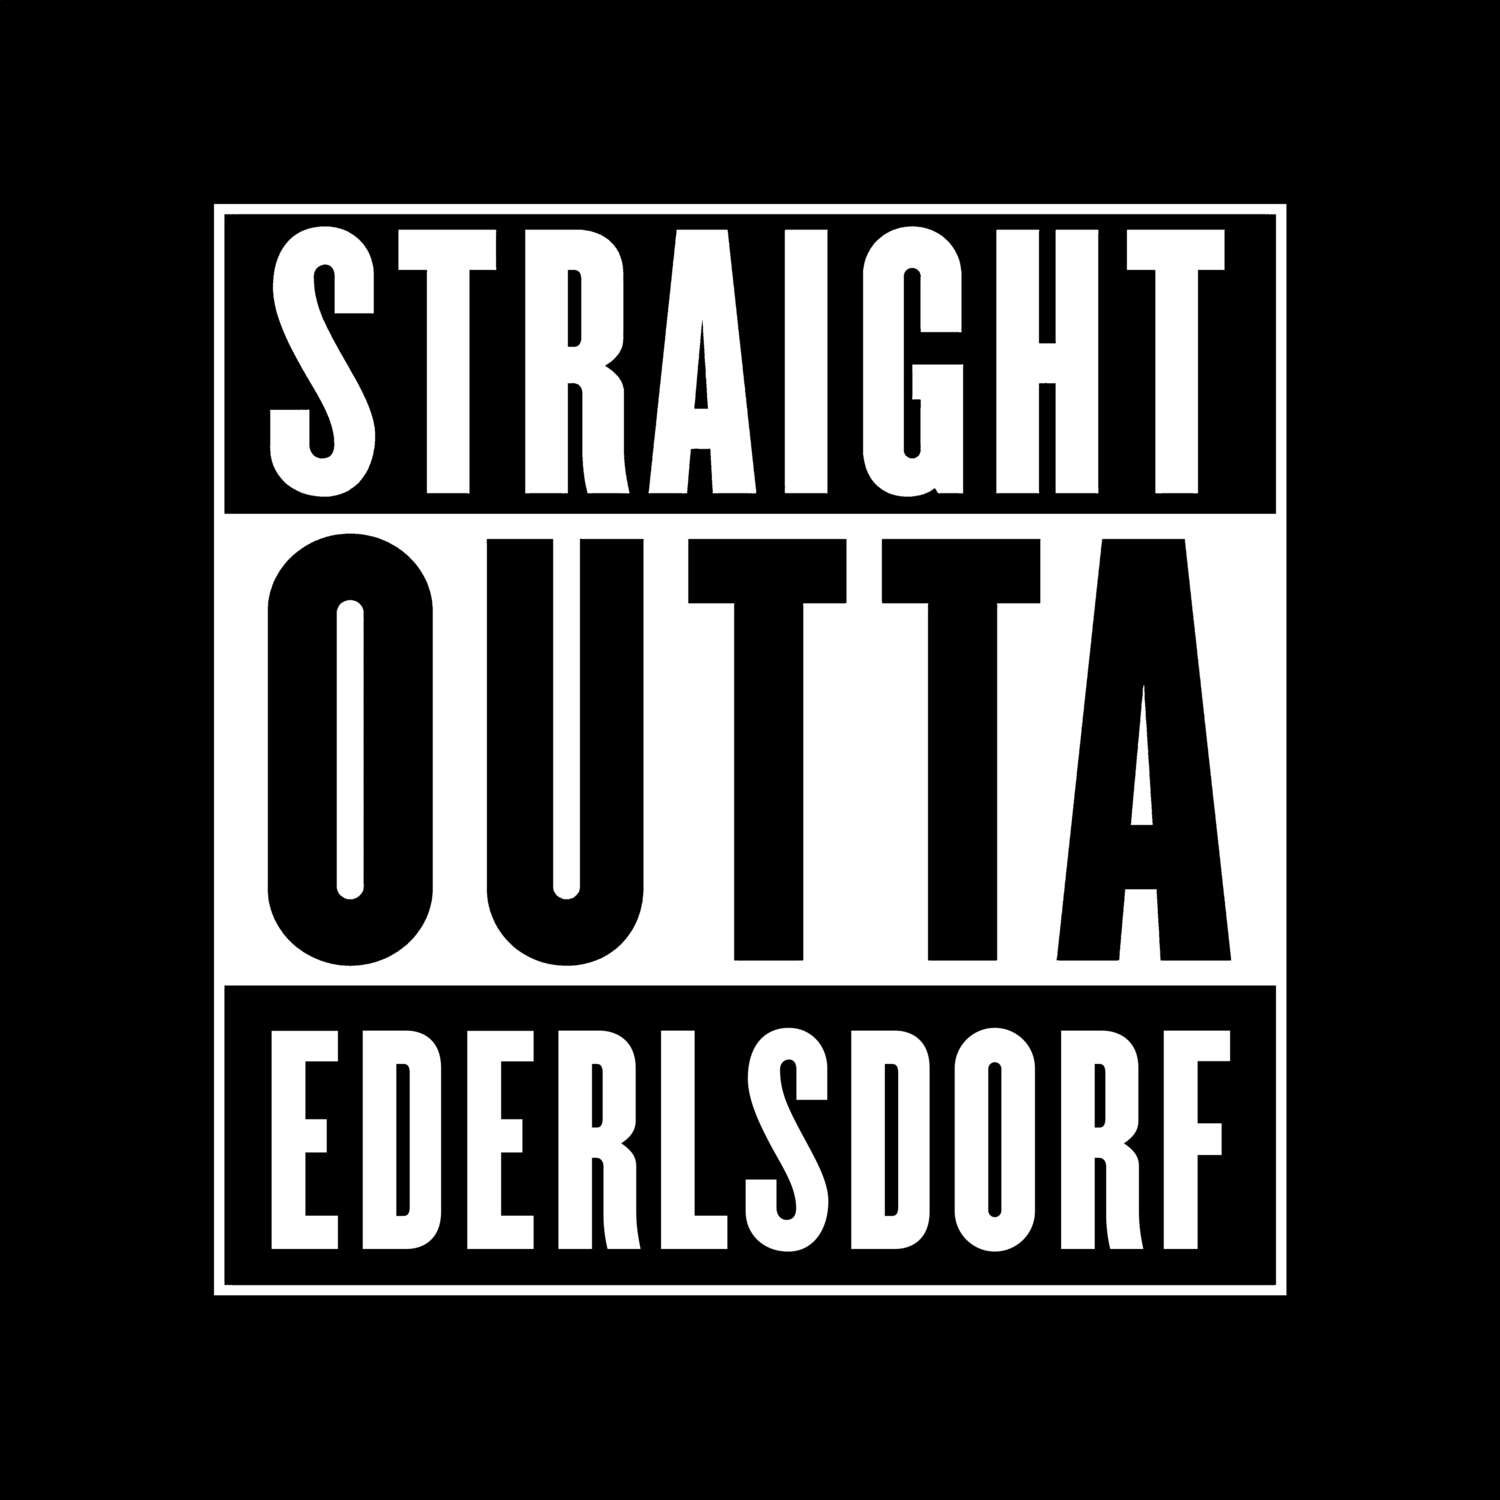 Ederlsdorf T-Shirt »Straight Outta«